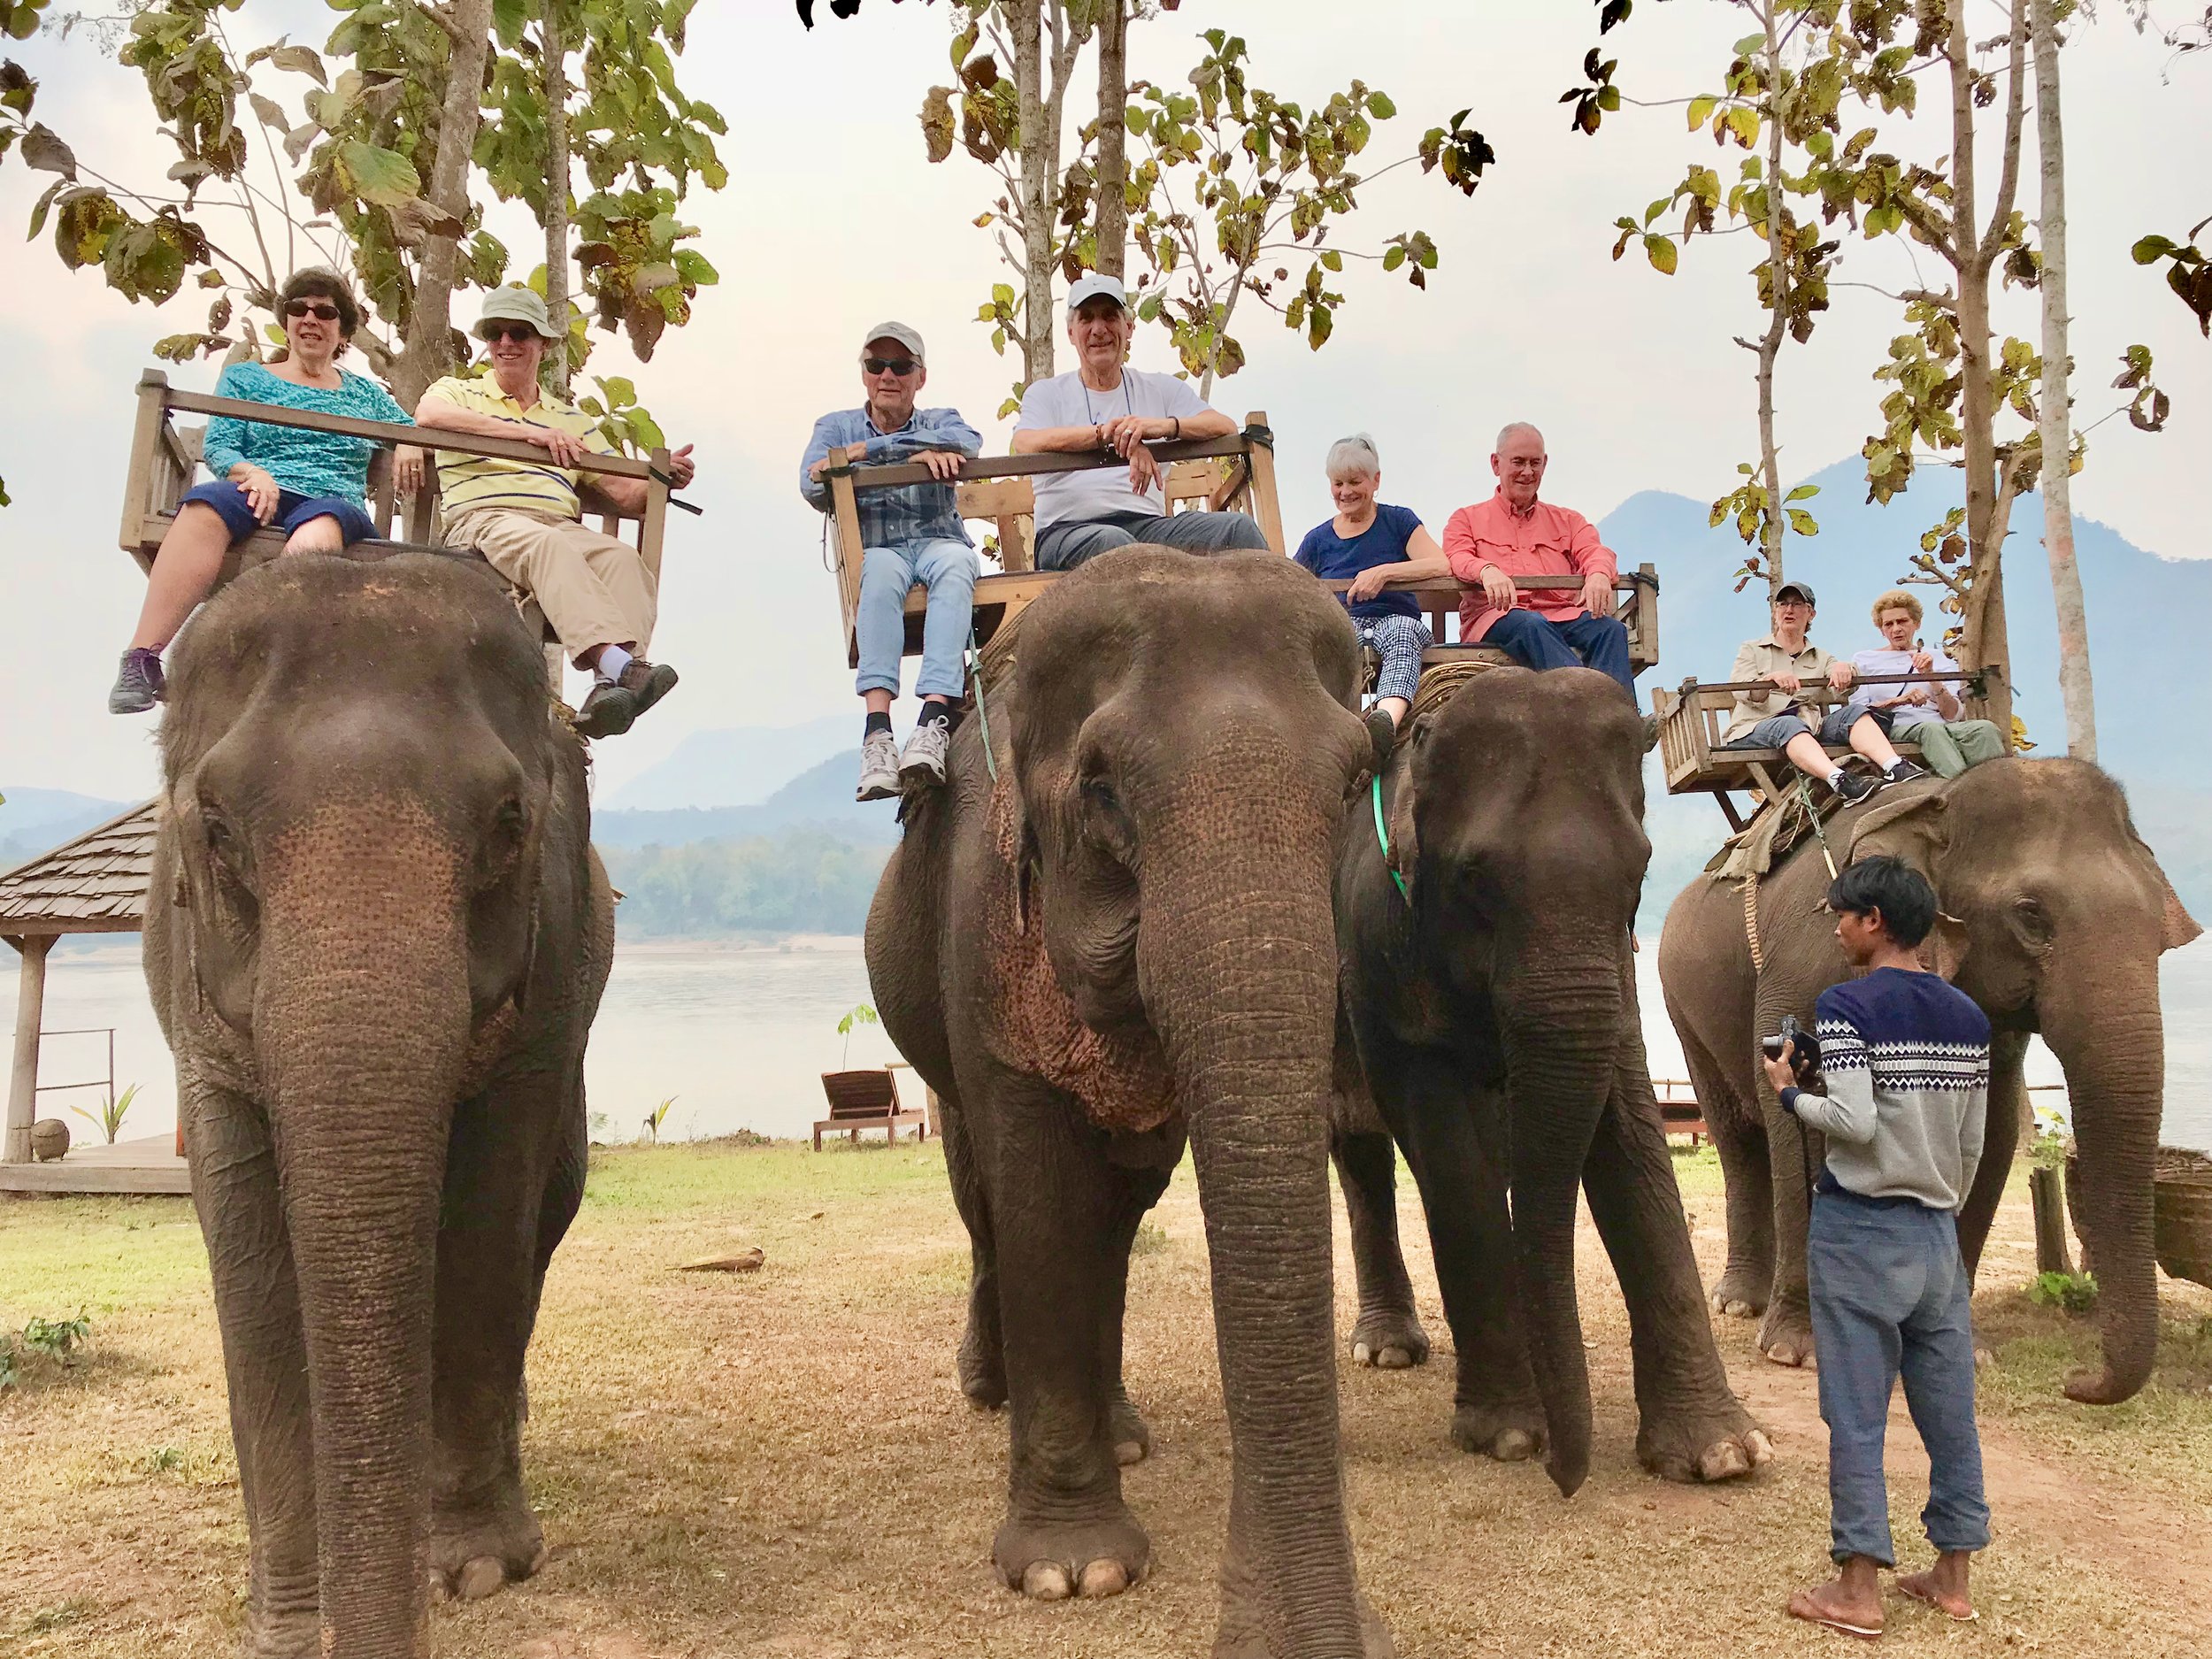 4 elephants w us back to campsite.jpg*.jpg